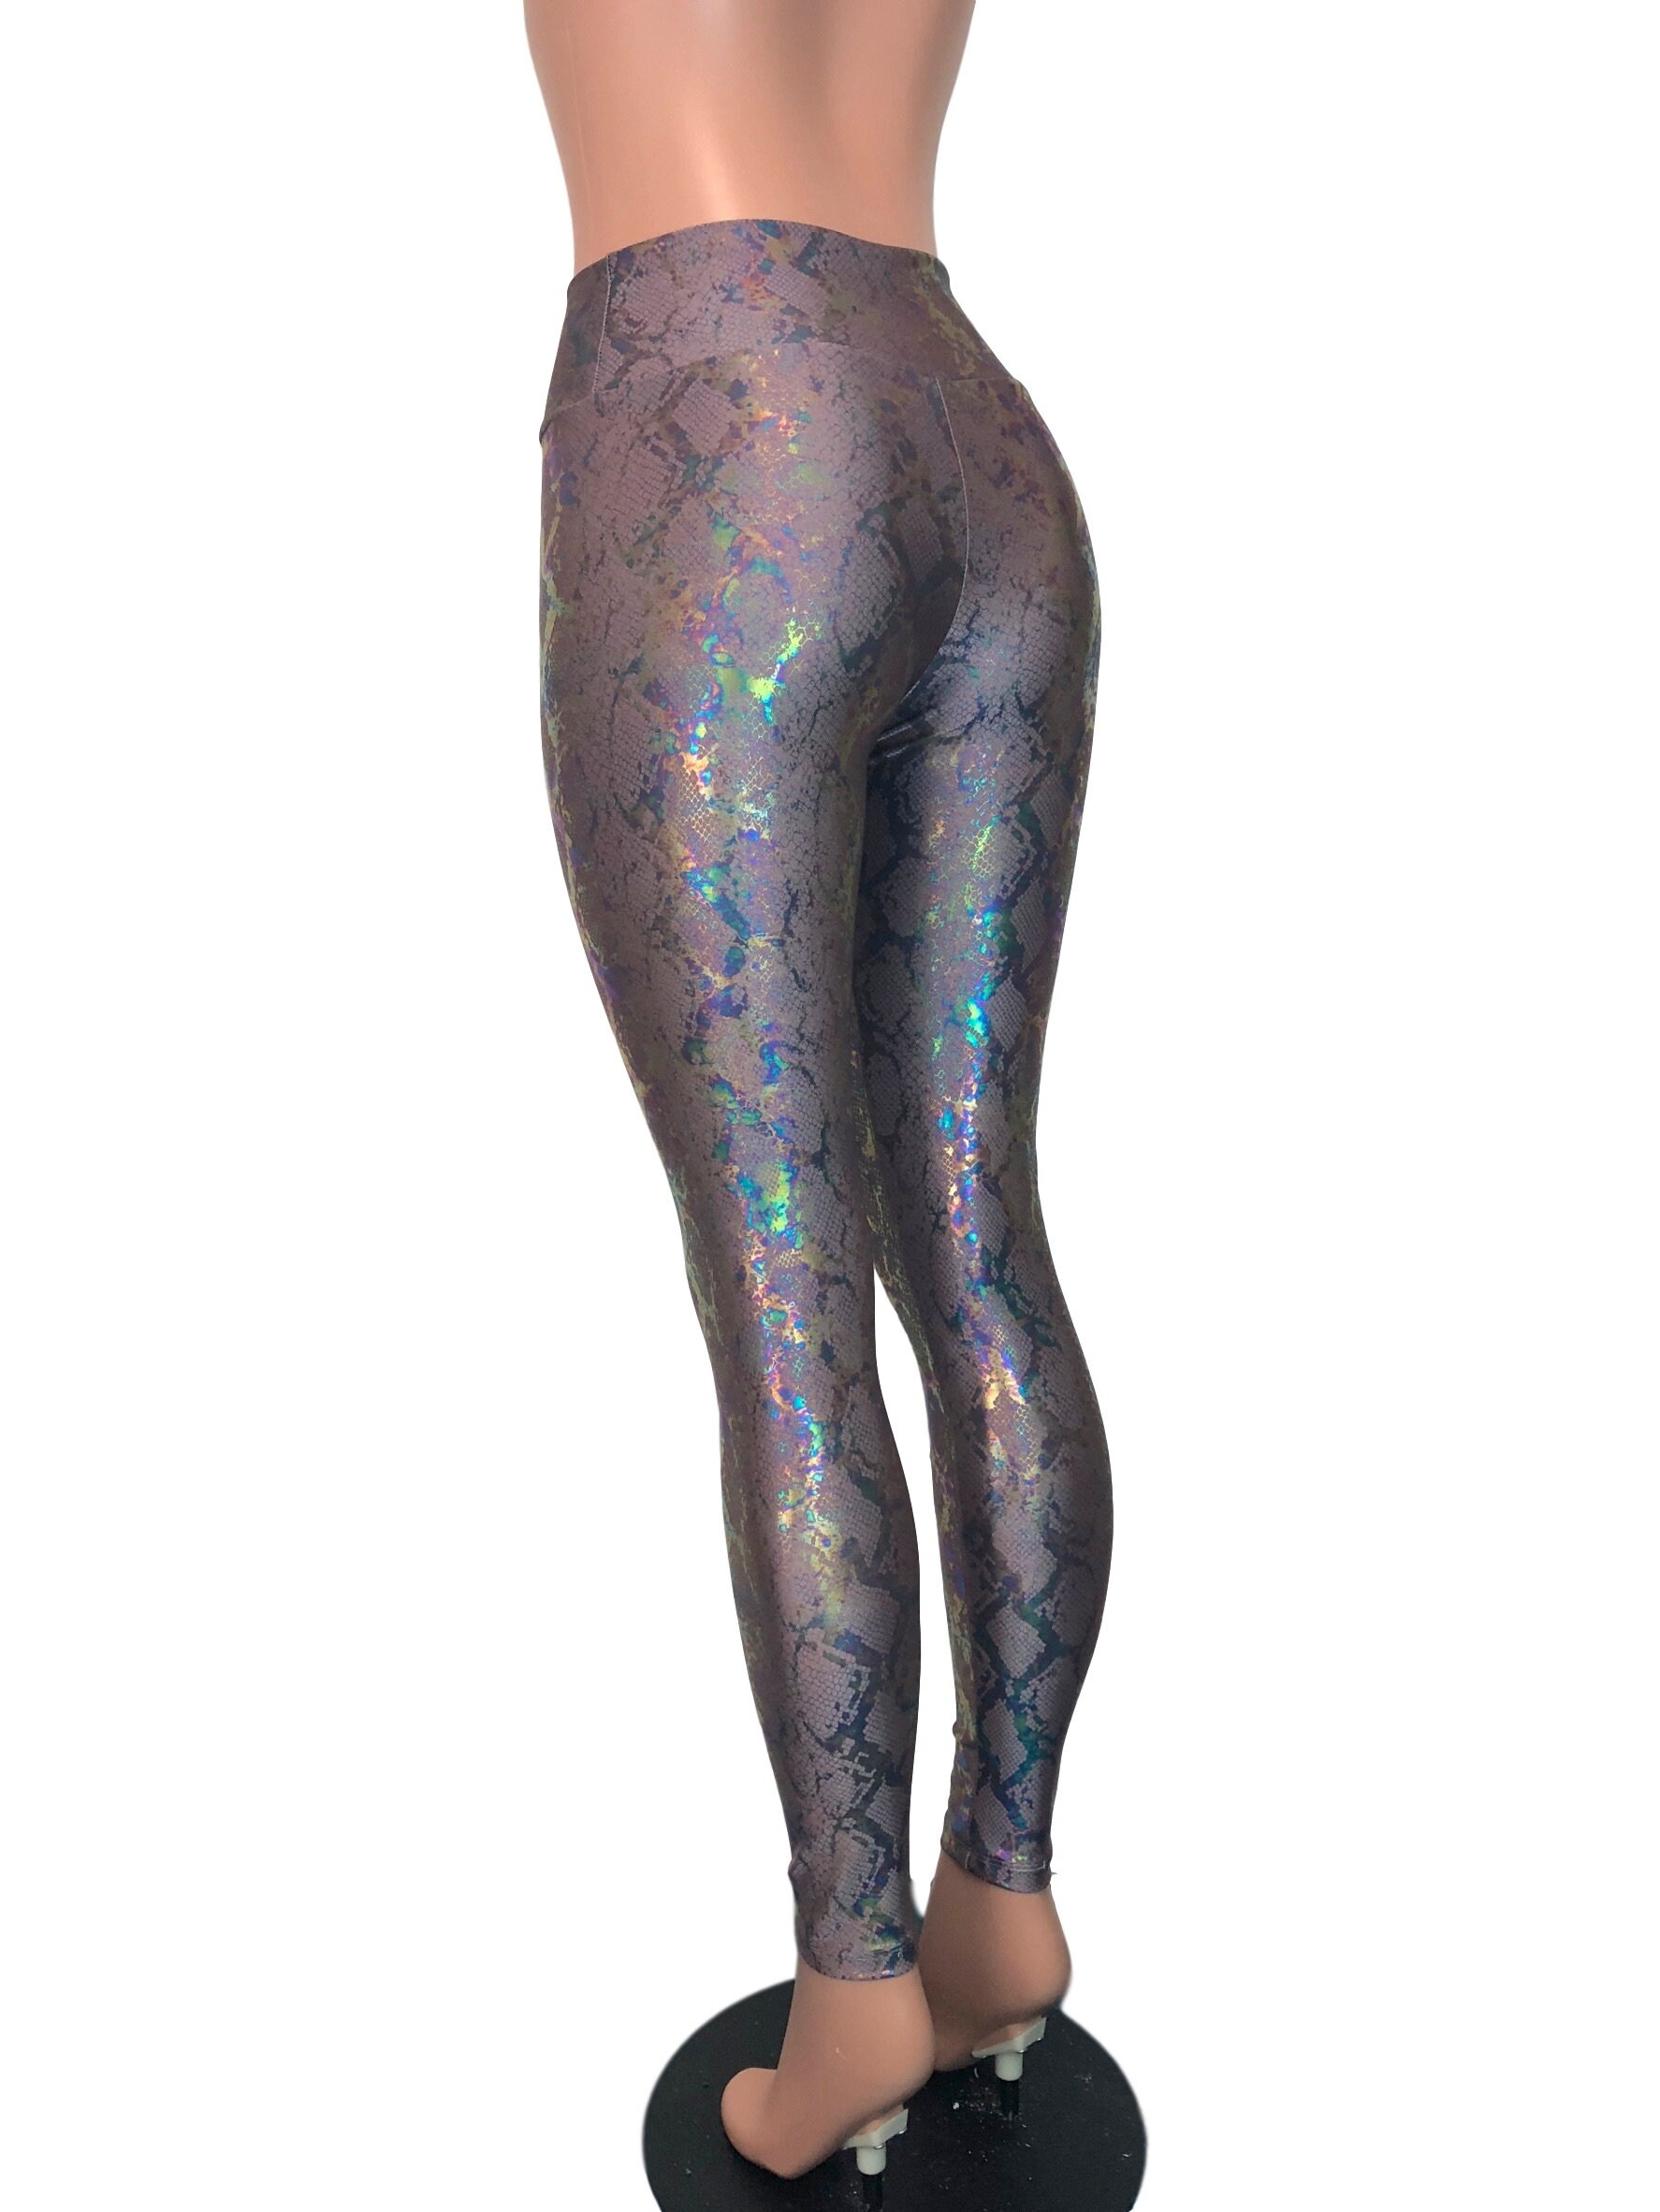 Snakeskin Holo Holographic High Waisted Leggings Pants Rave | Etsy